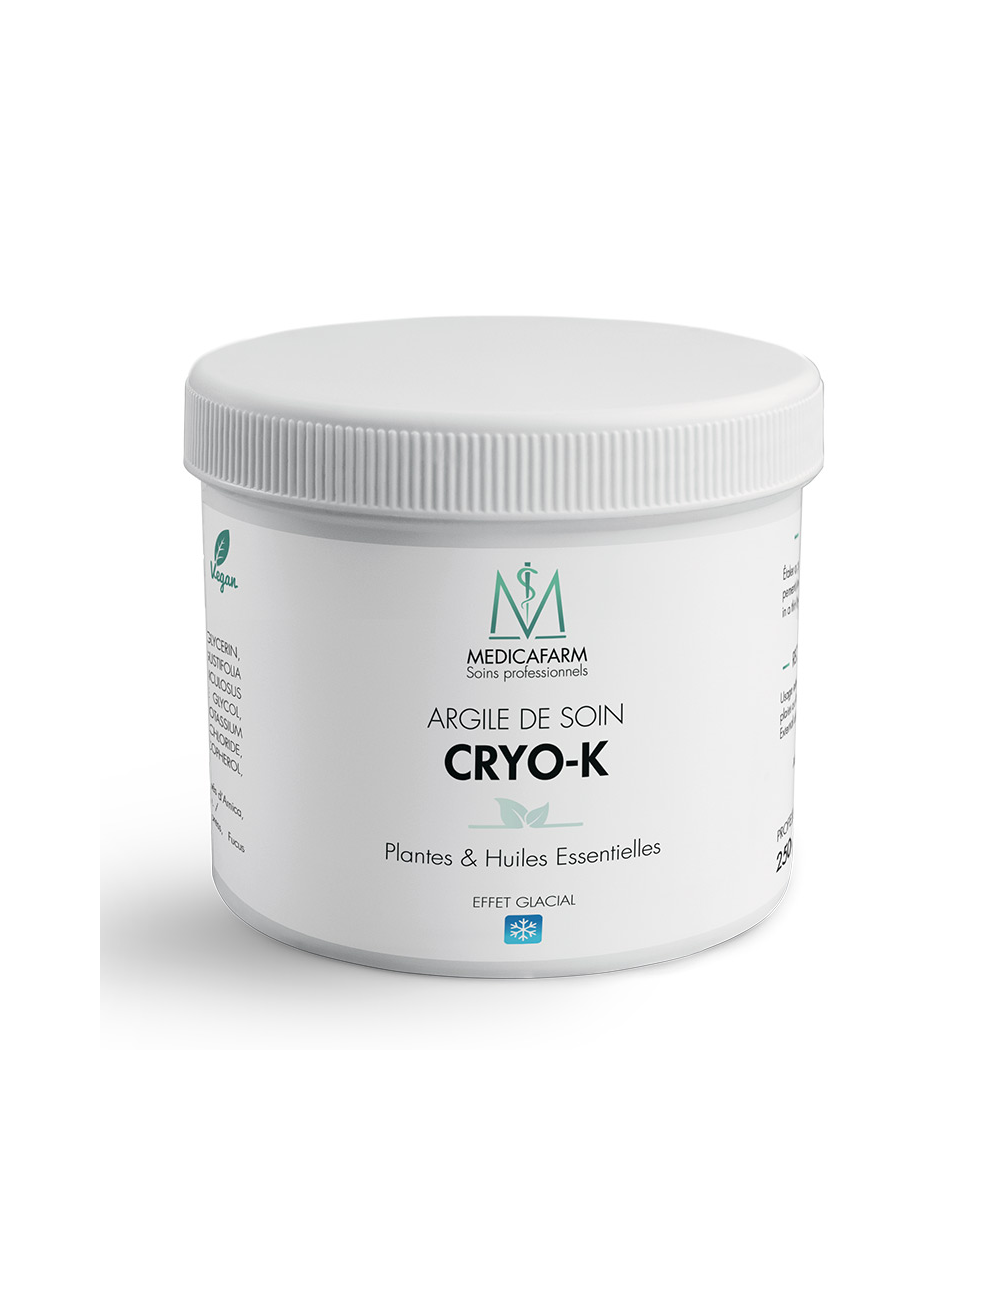 Argile de soin Cryo-argil - Effet glacial - Pot 250 g - Medicafarm